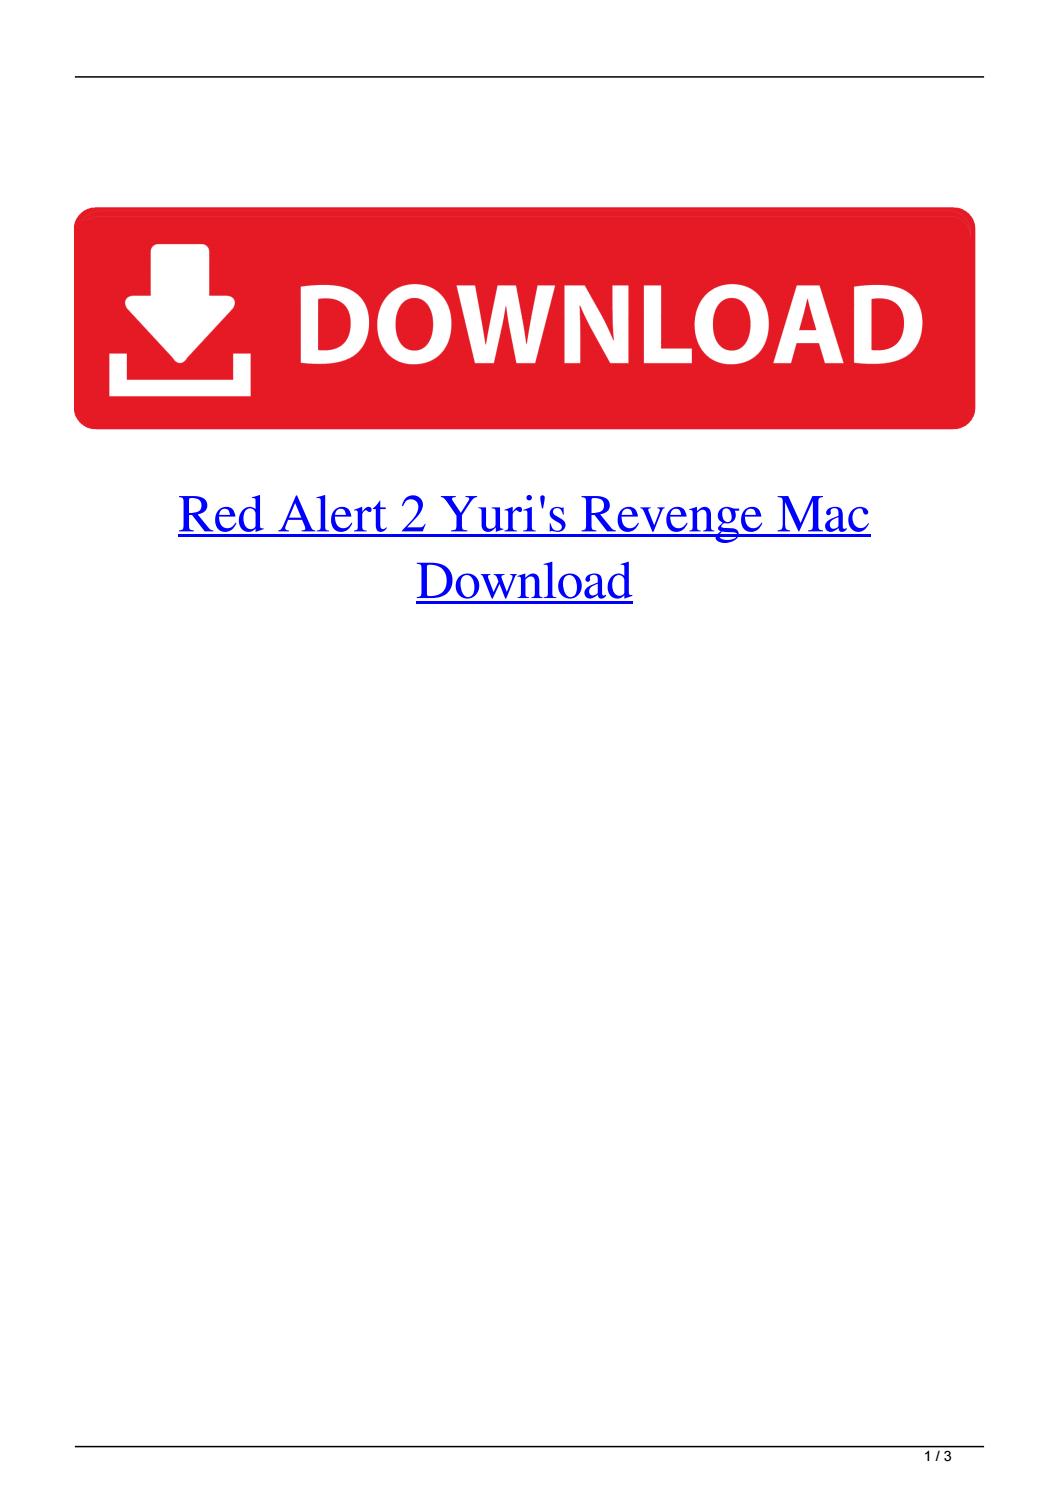 Red Alert download the last version for apple